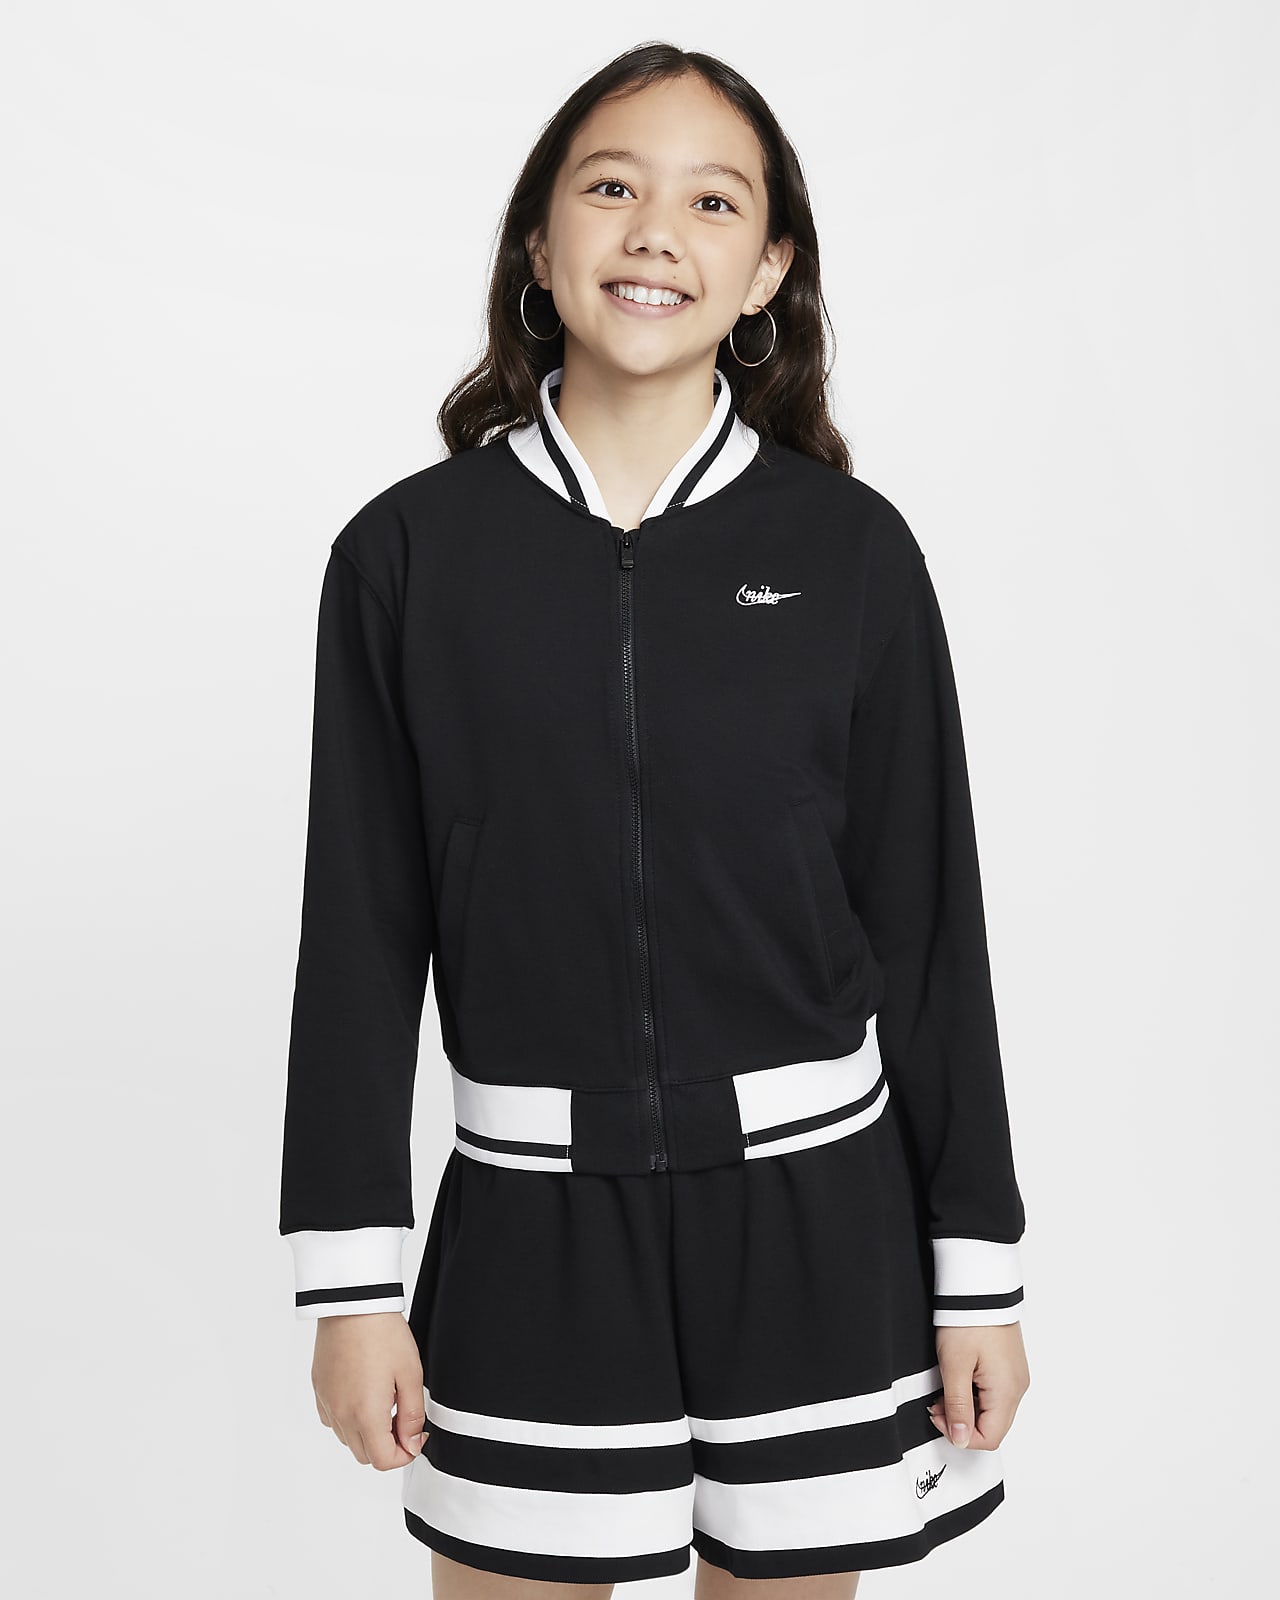 Nike Sportswear kabát lányoknak